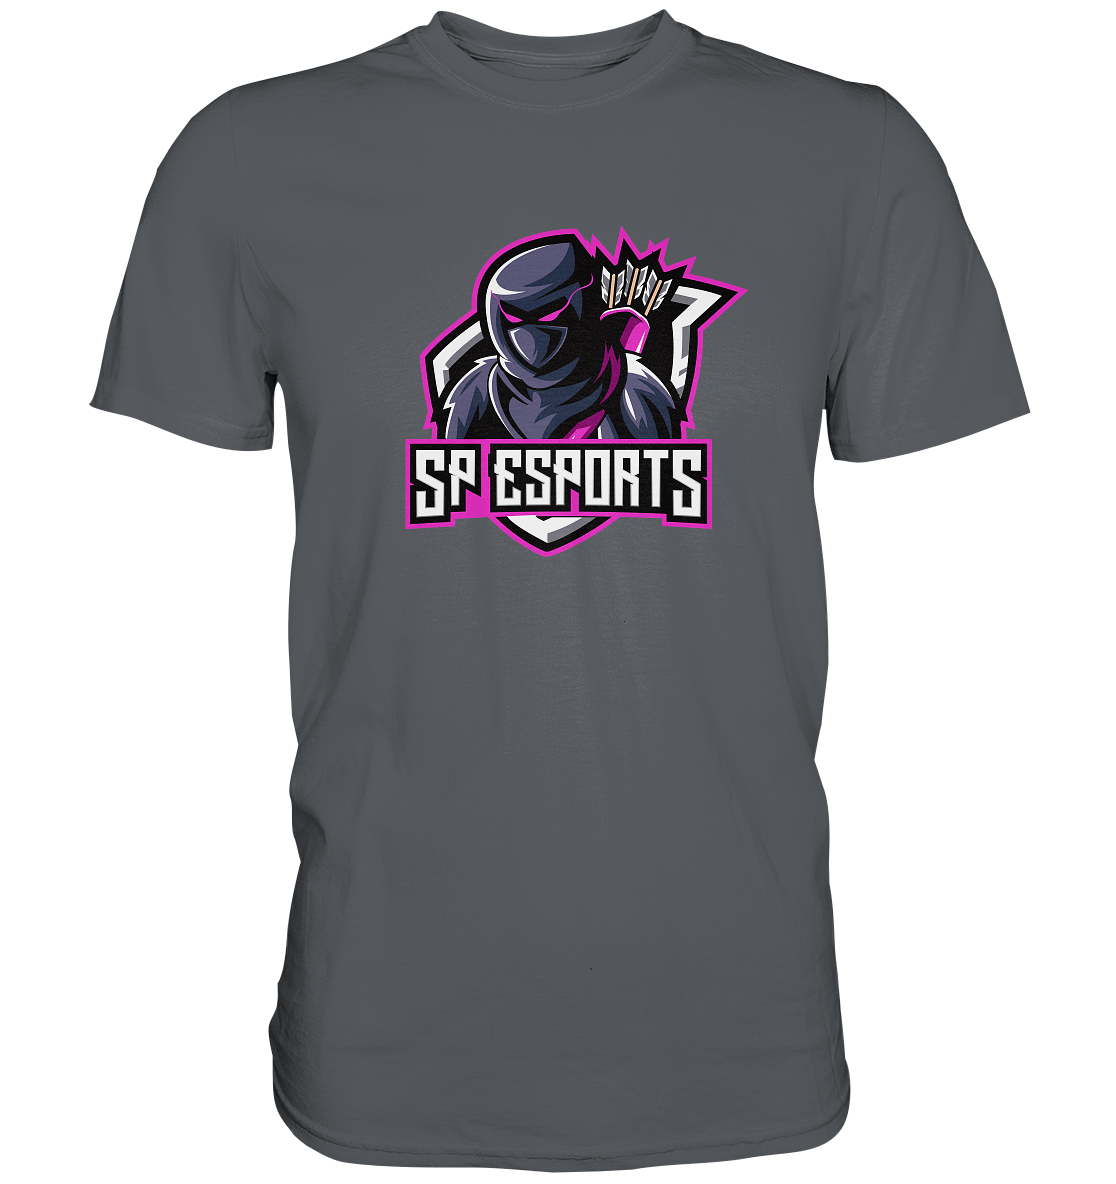 SP ESPORTS - Basic Shirt